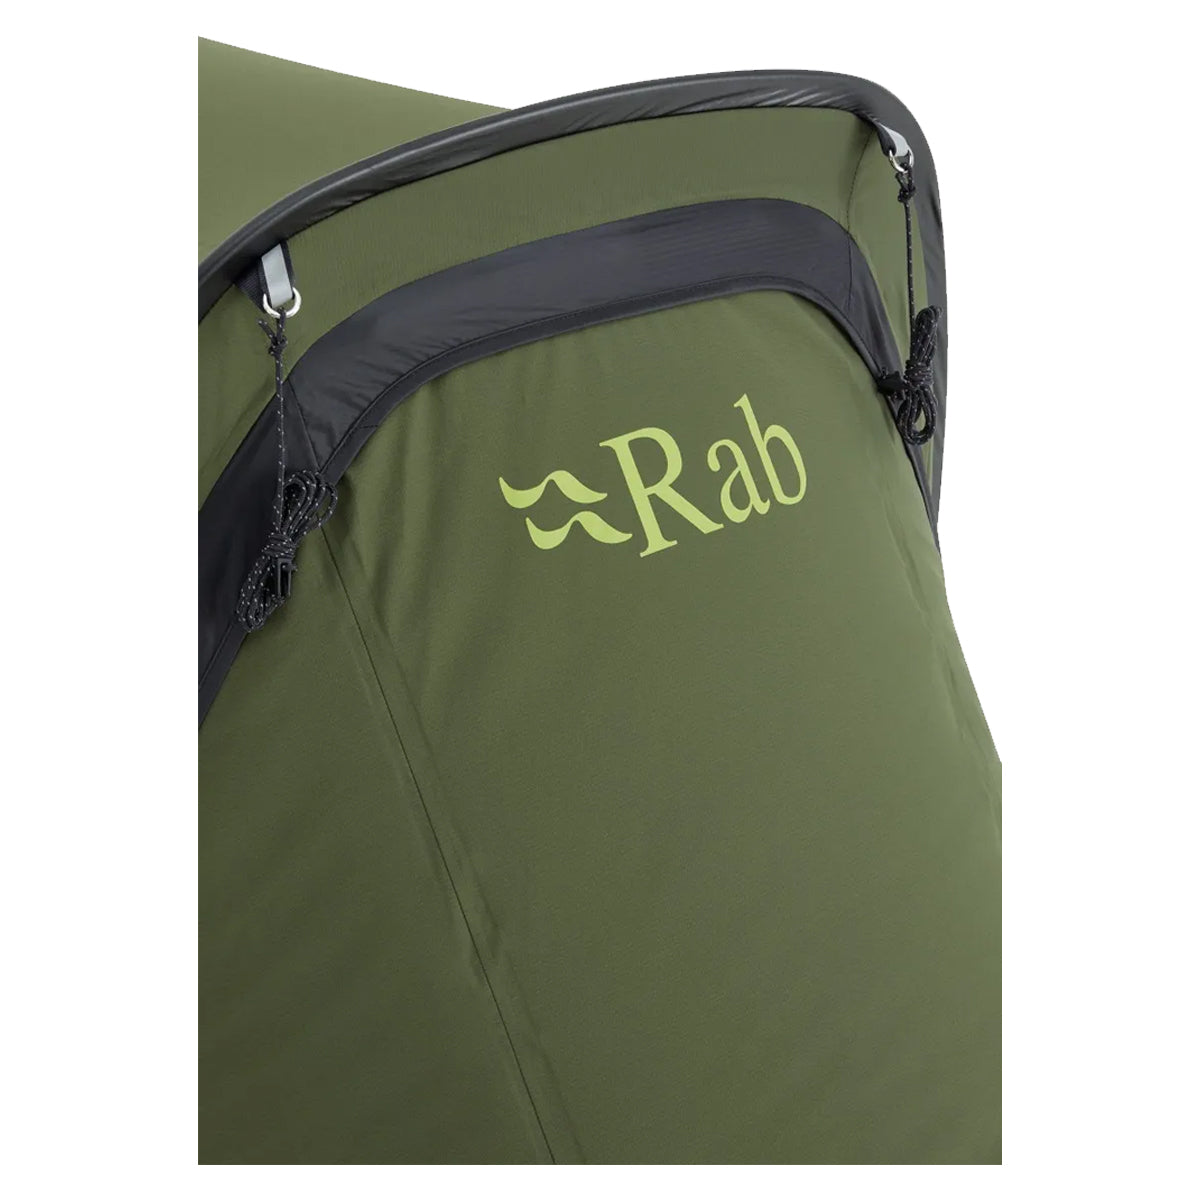 Rab Ridge Raider Bivy in  by GOHUNT | Rab - GOHUNT Shop